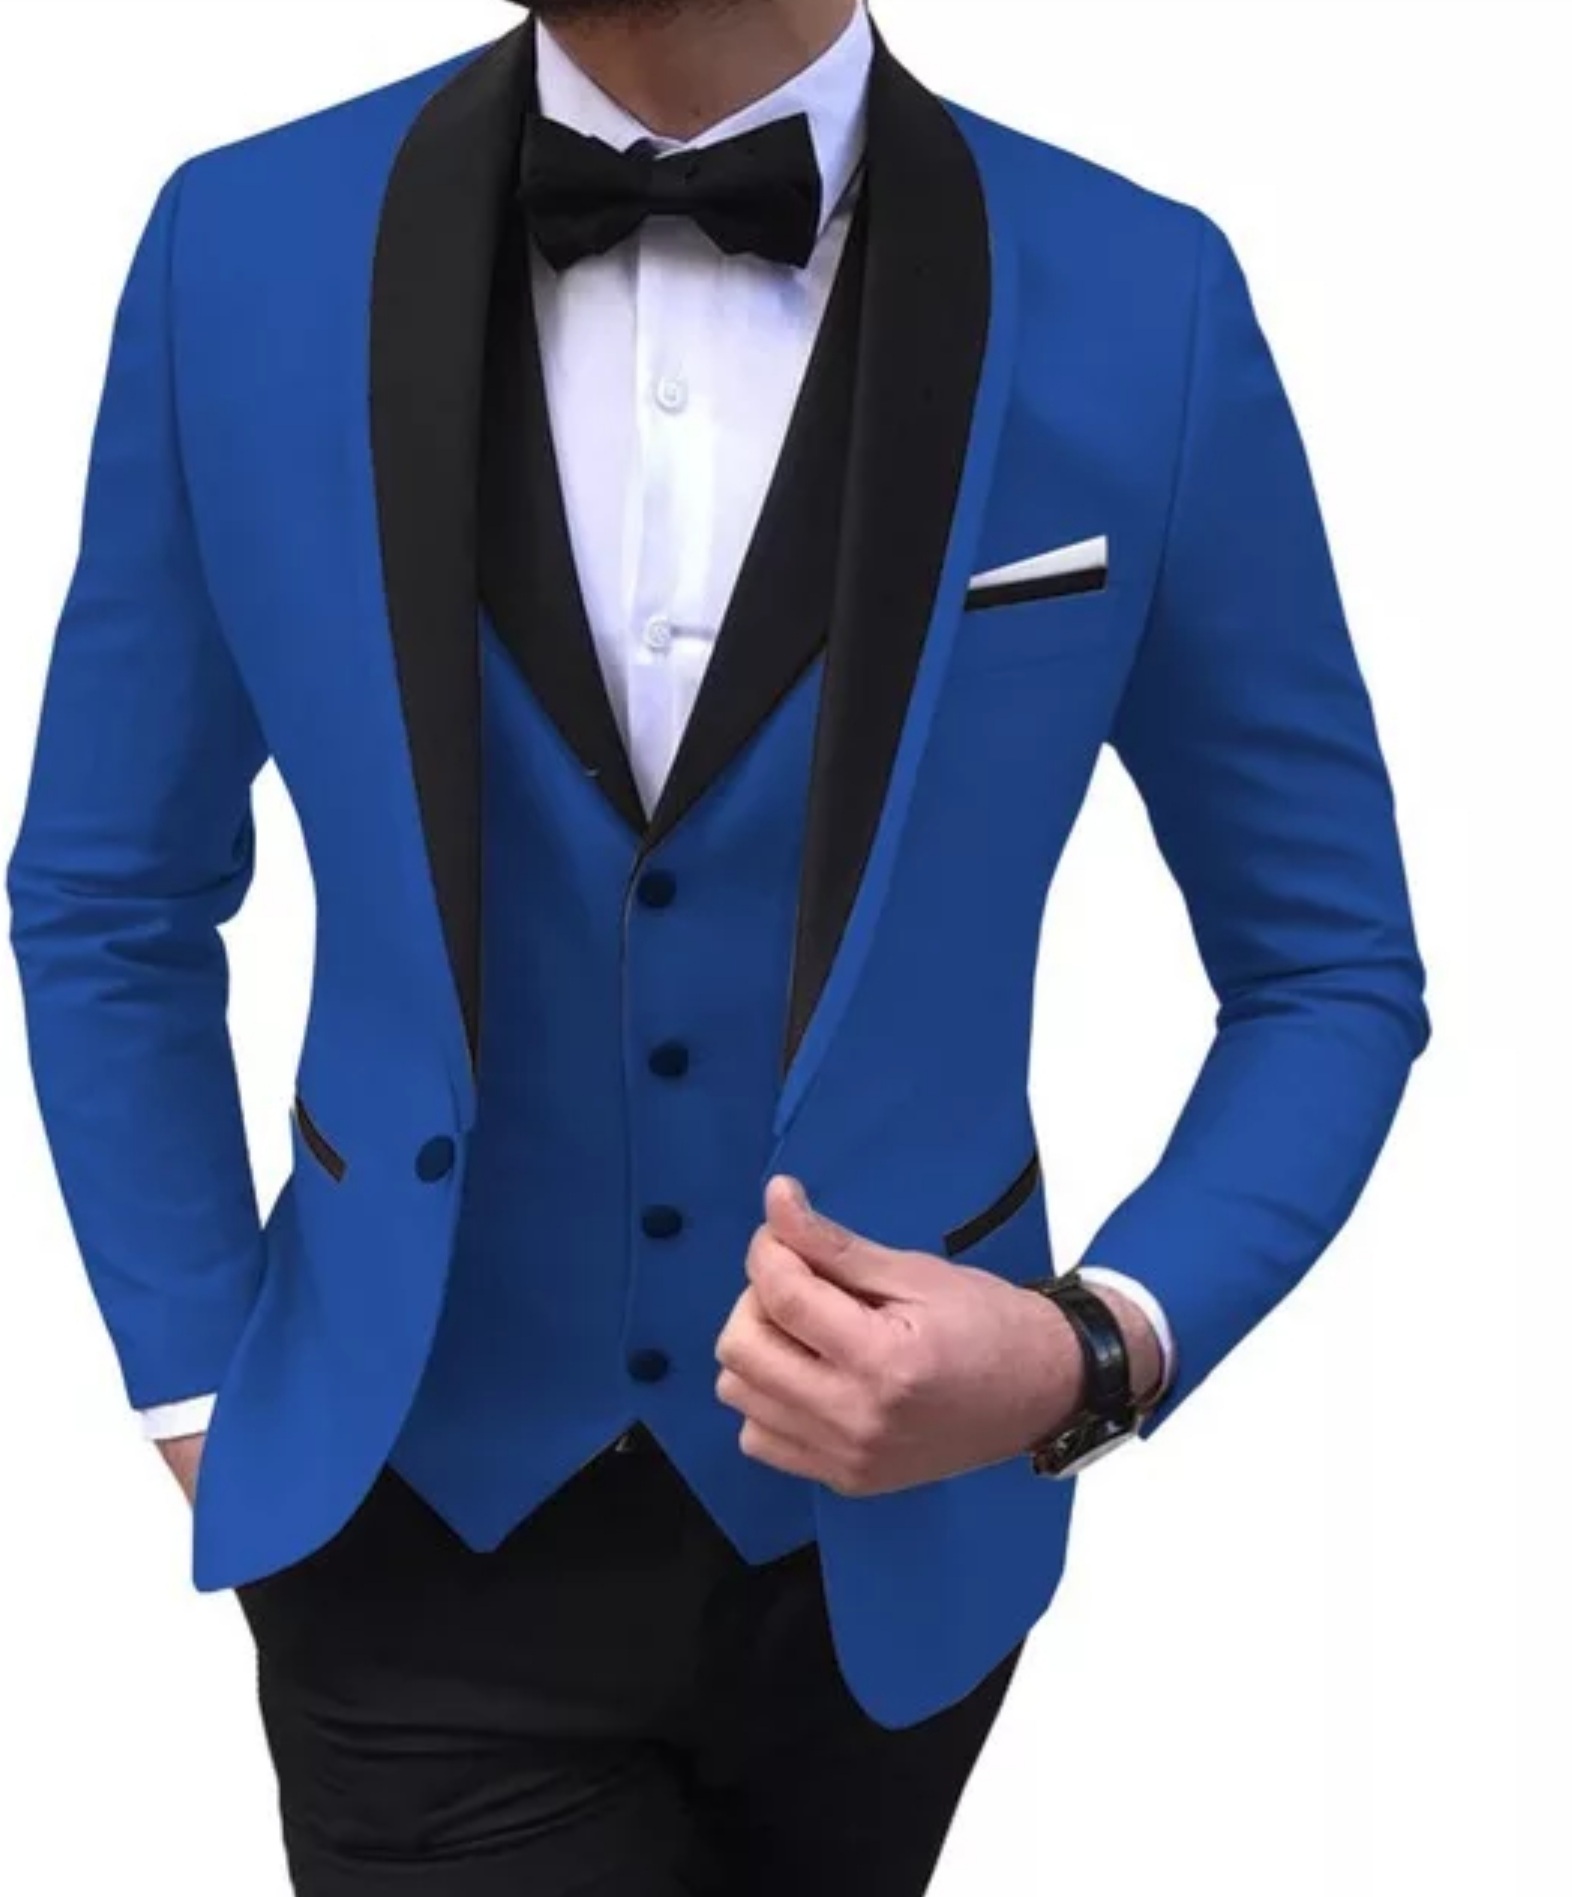 my-singapore-tailor-suits-rent-rental-hire_suit-shop-singapore-black-tie-wedding-tuxedo-bespoke-tailoring-tailors-tailor-091